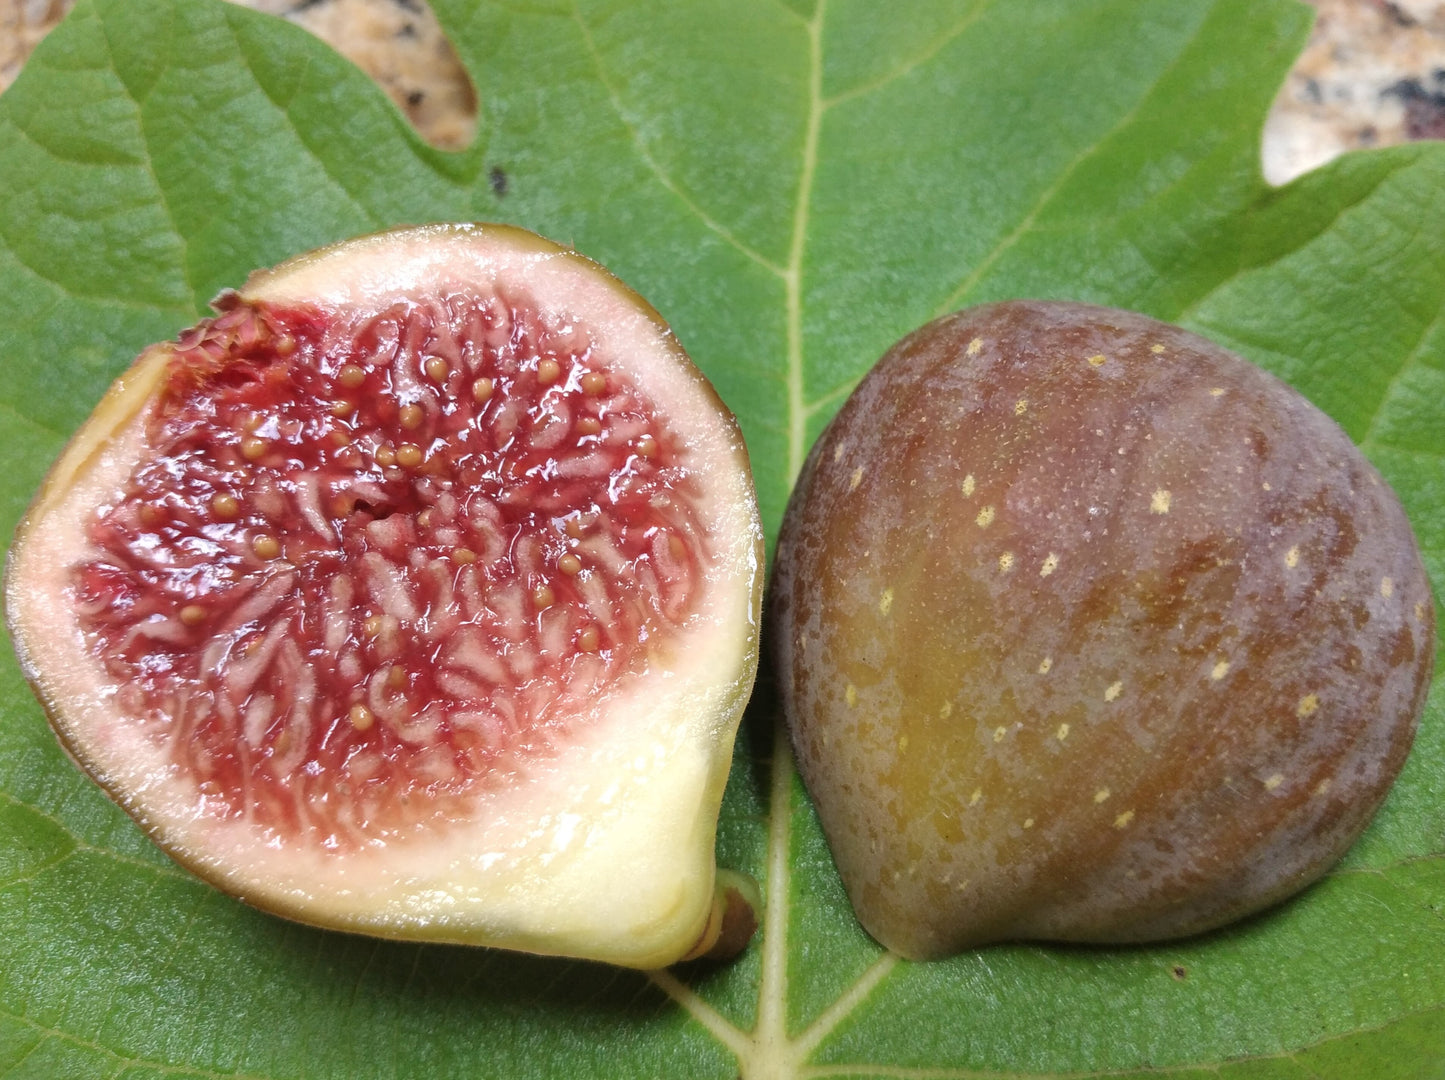 Bursa Siyahi Turkish Fig Tree Variety - 2 Cuttings - Black Bursa - Tasty Smyrna Figs